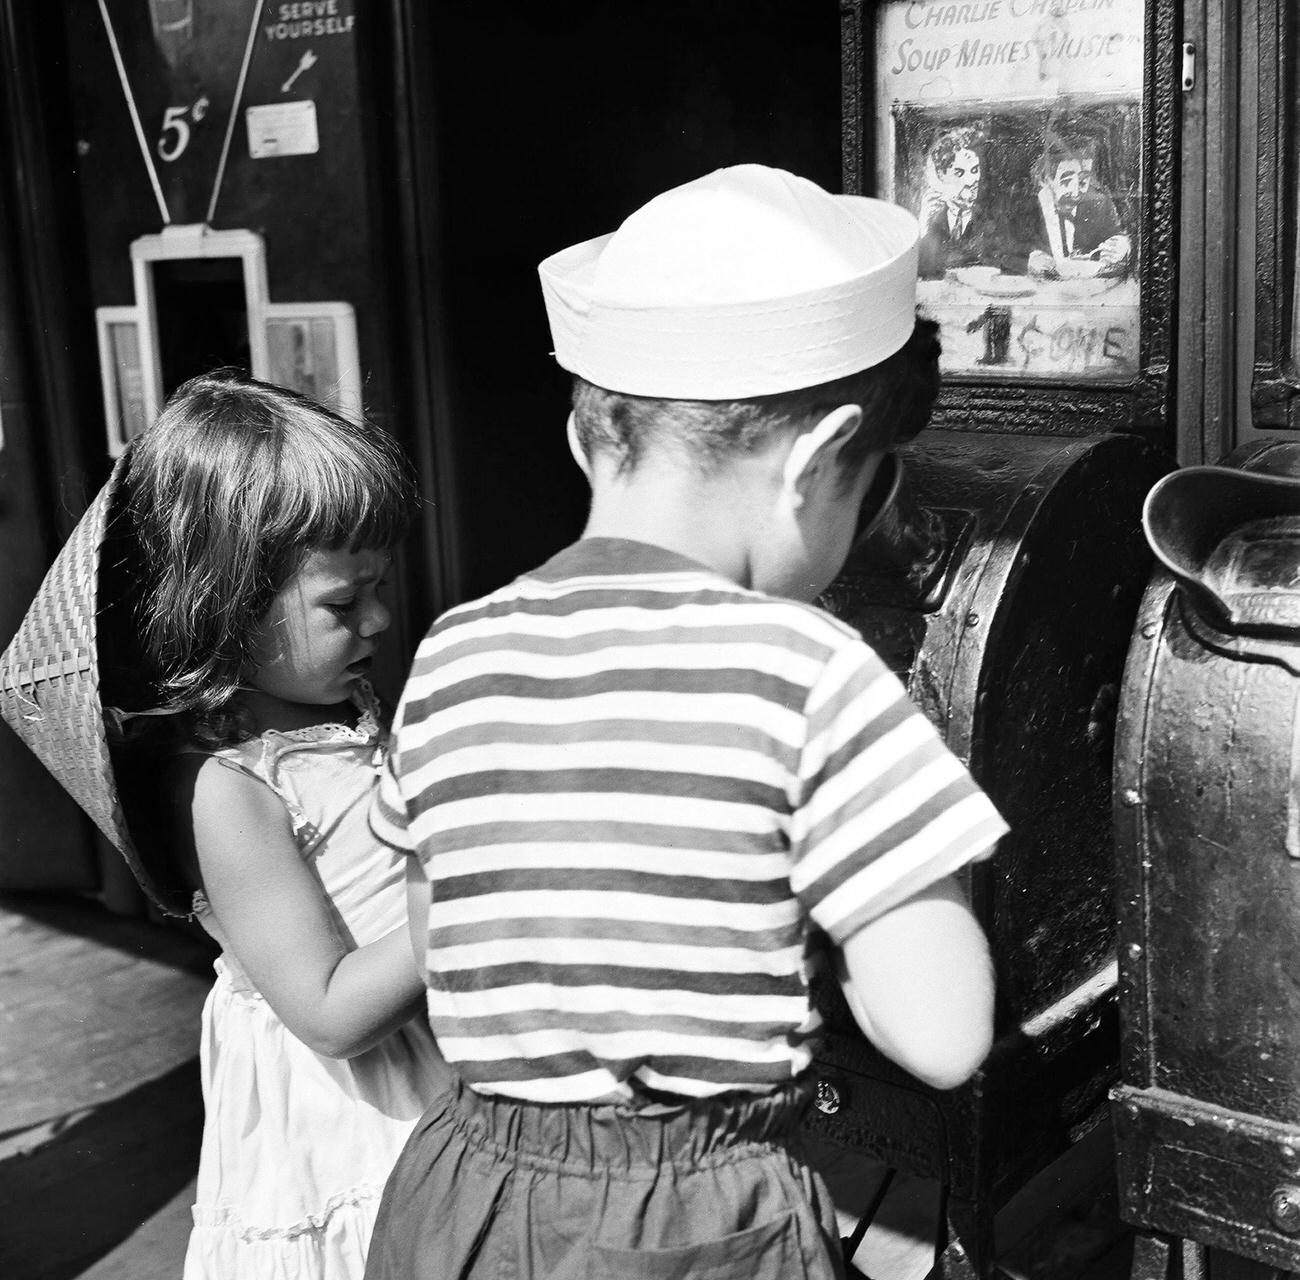 Kids Playing At Coney Island, Brooklyn, 1948